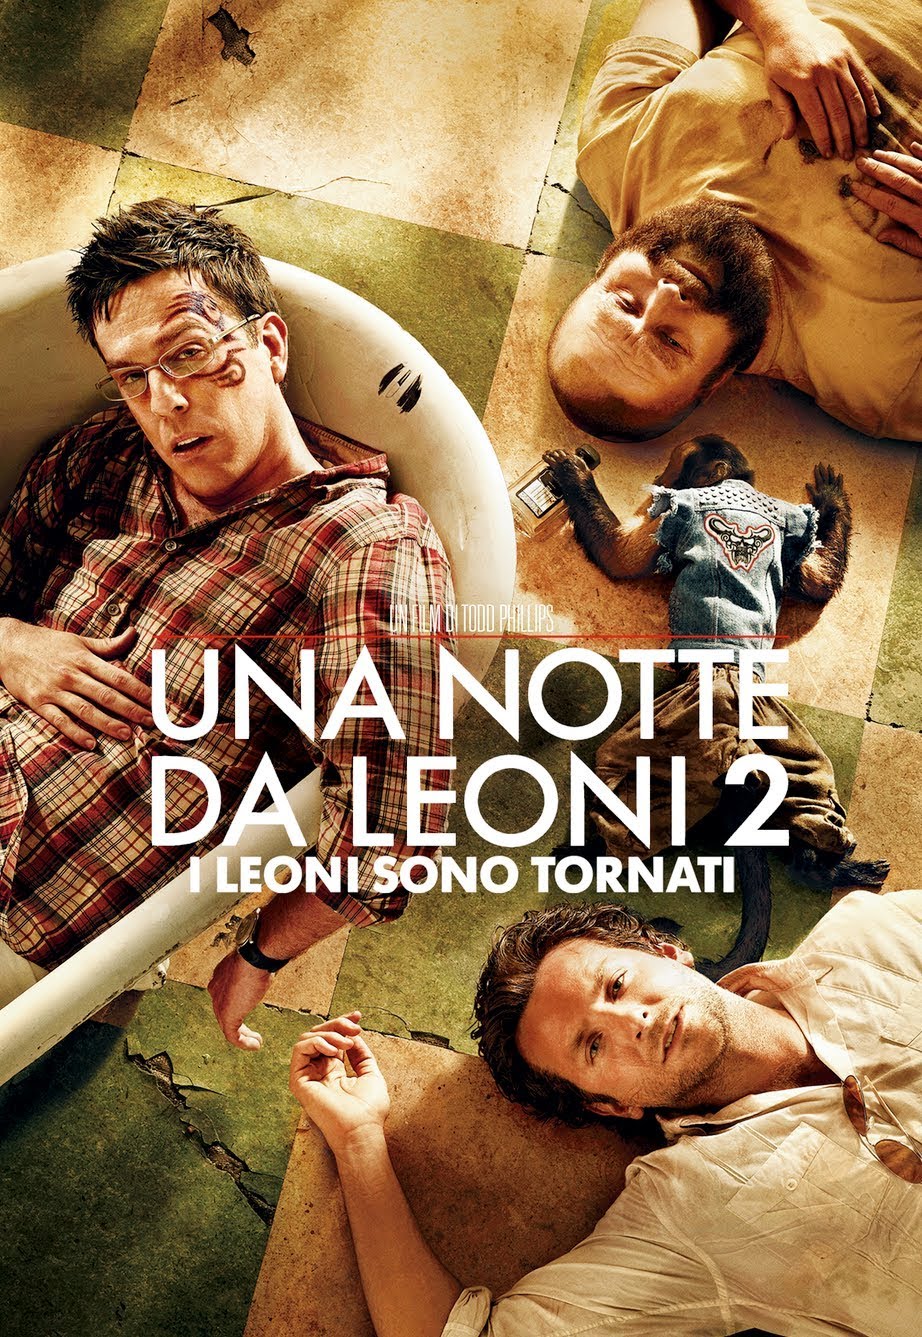 Una notte da leoni 2 [HD] (2011)